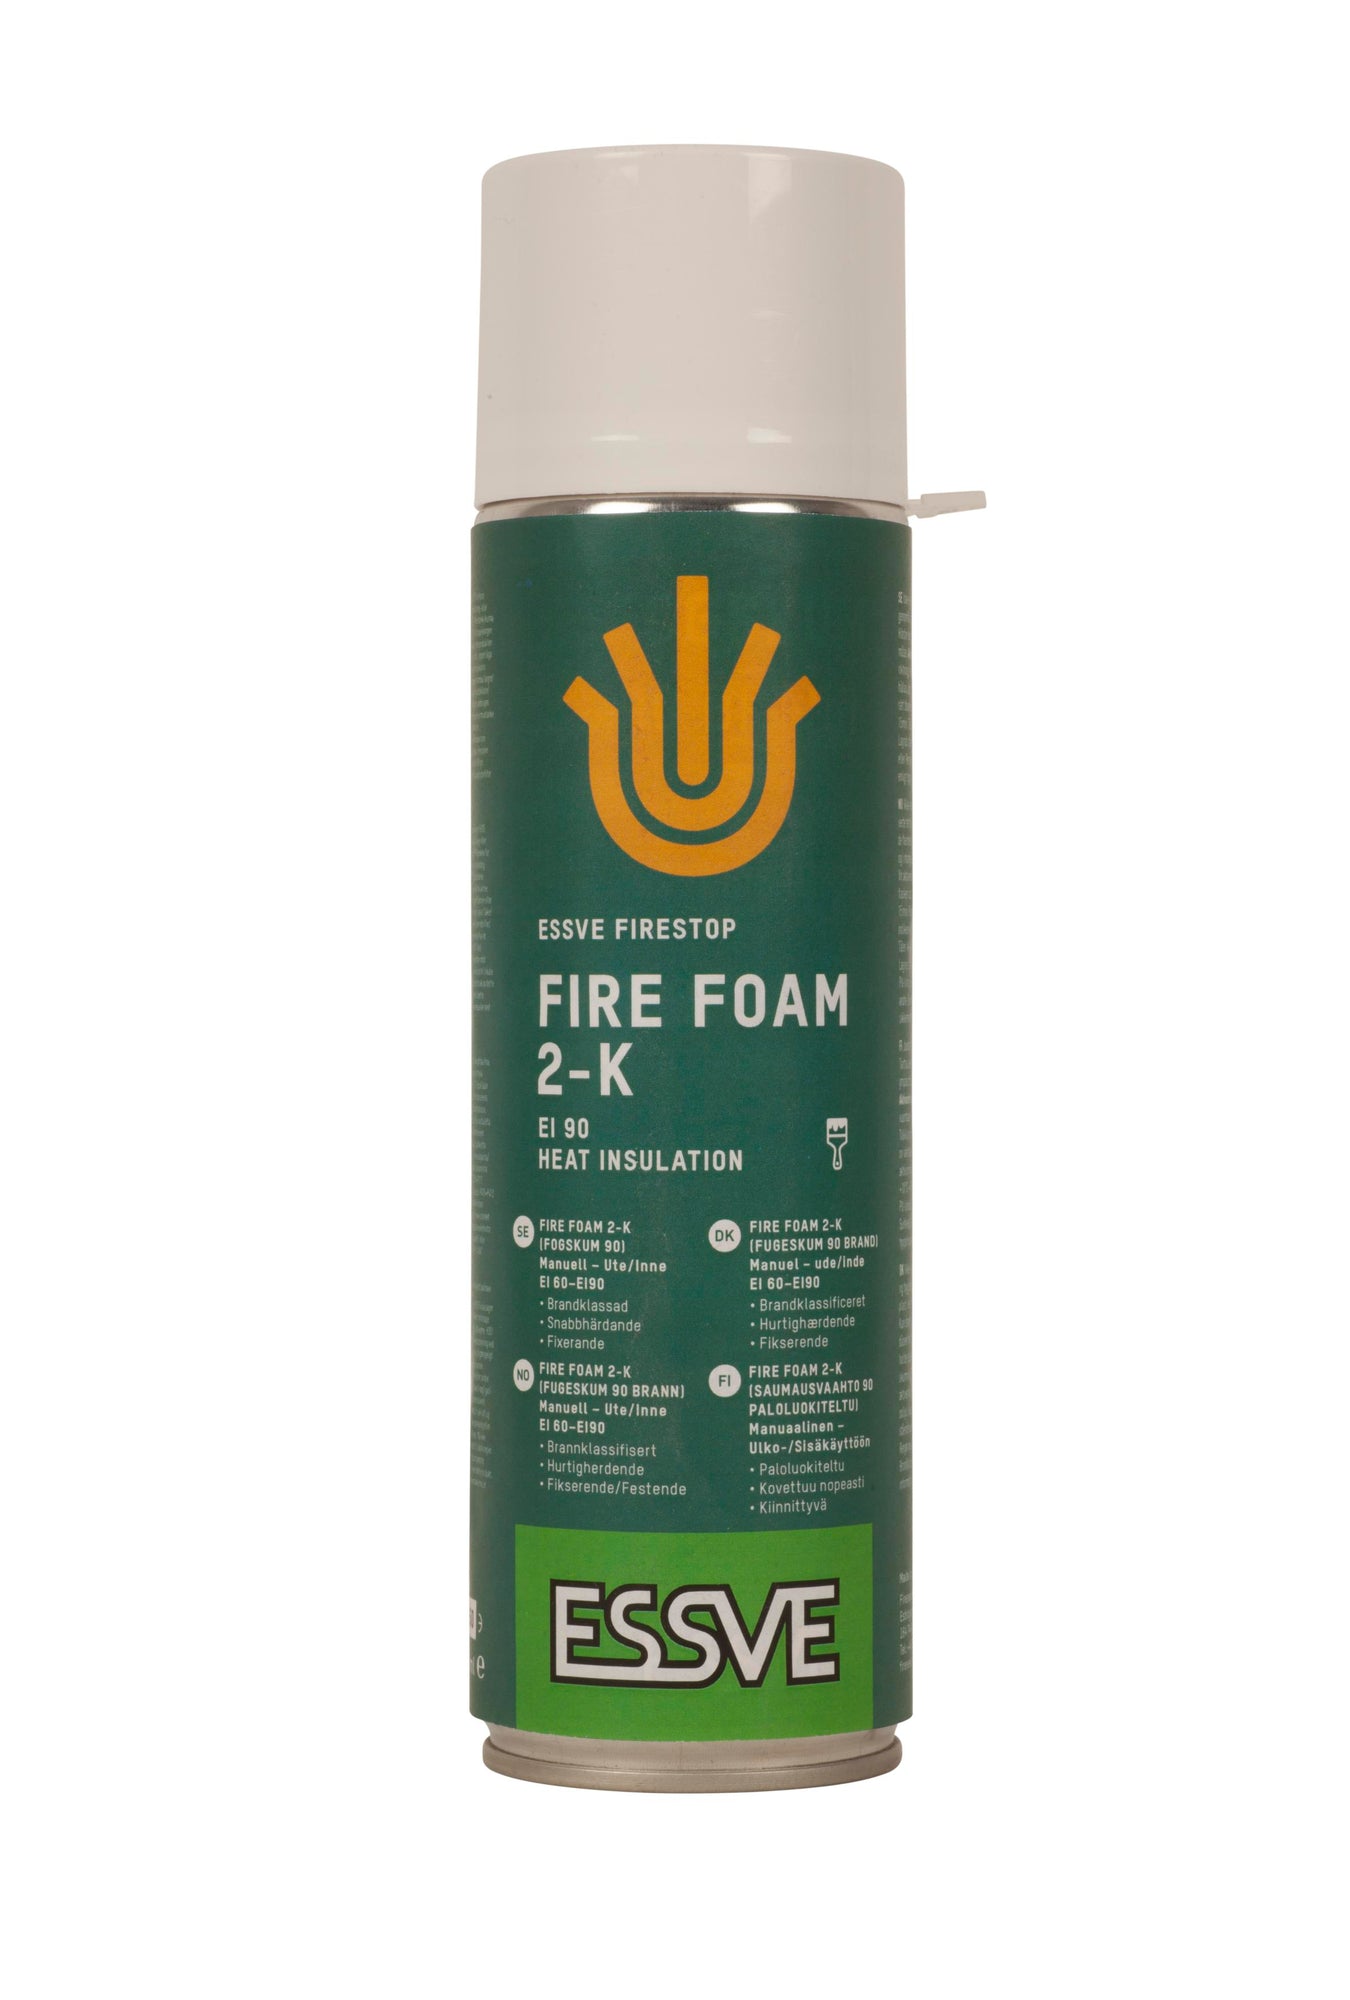 ESSVE FIRESTOP FireFoam 2-K | Essve | Essve, Fugemasser, Håndskum, Skum, skum og branntetting